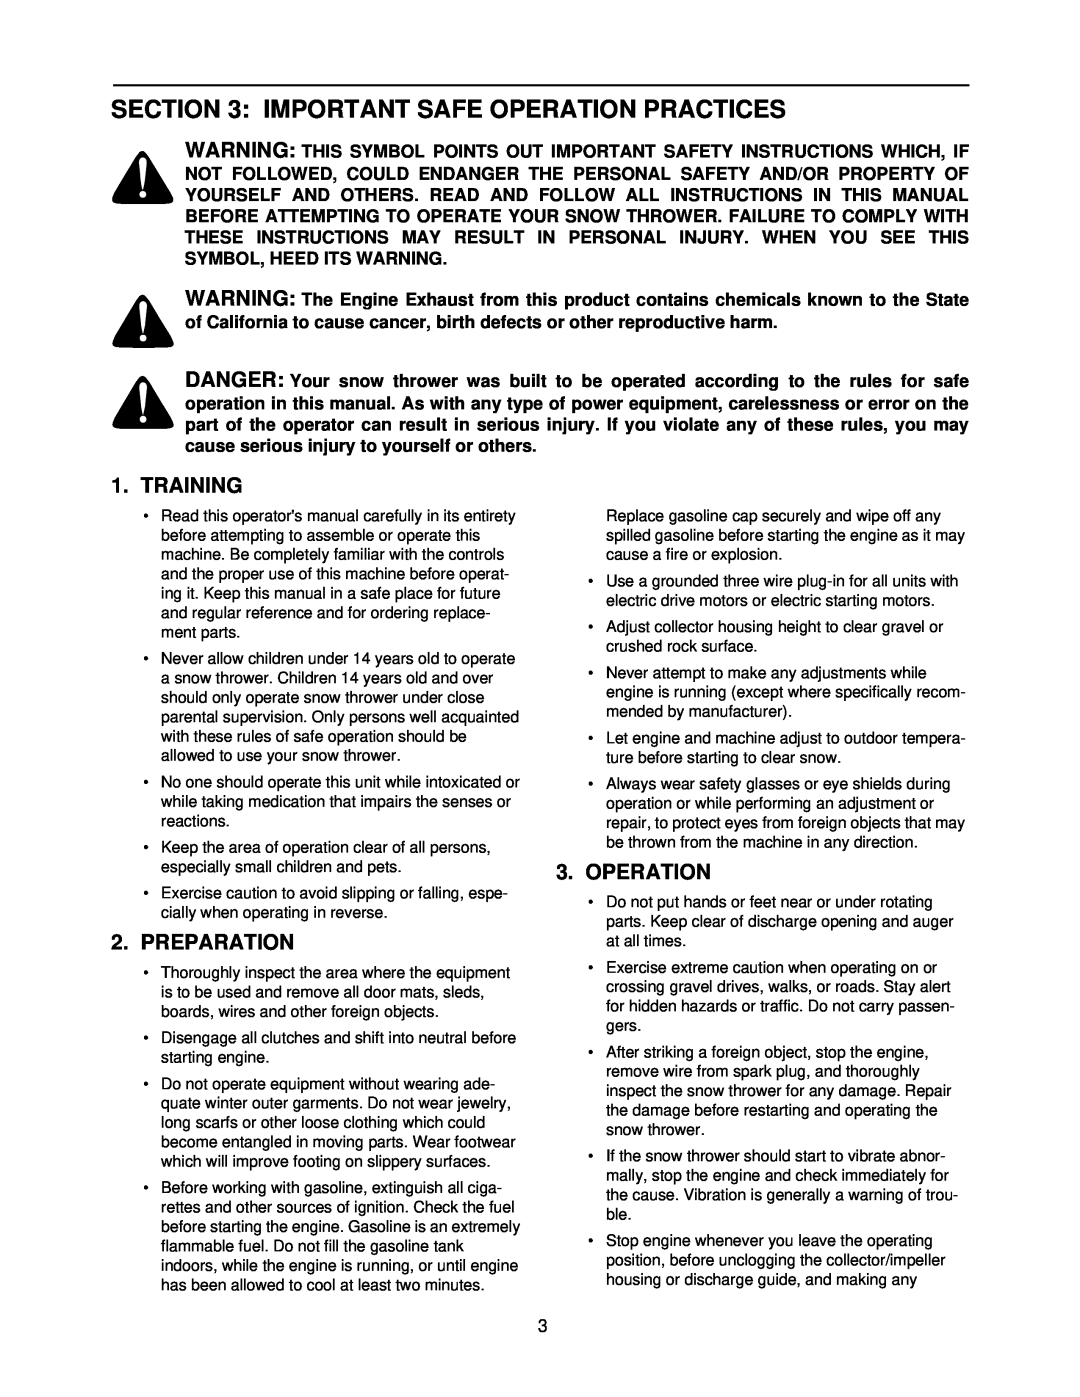 MTD E600E manual Important Safe Operation Practices, Training, Preparation 